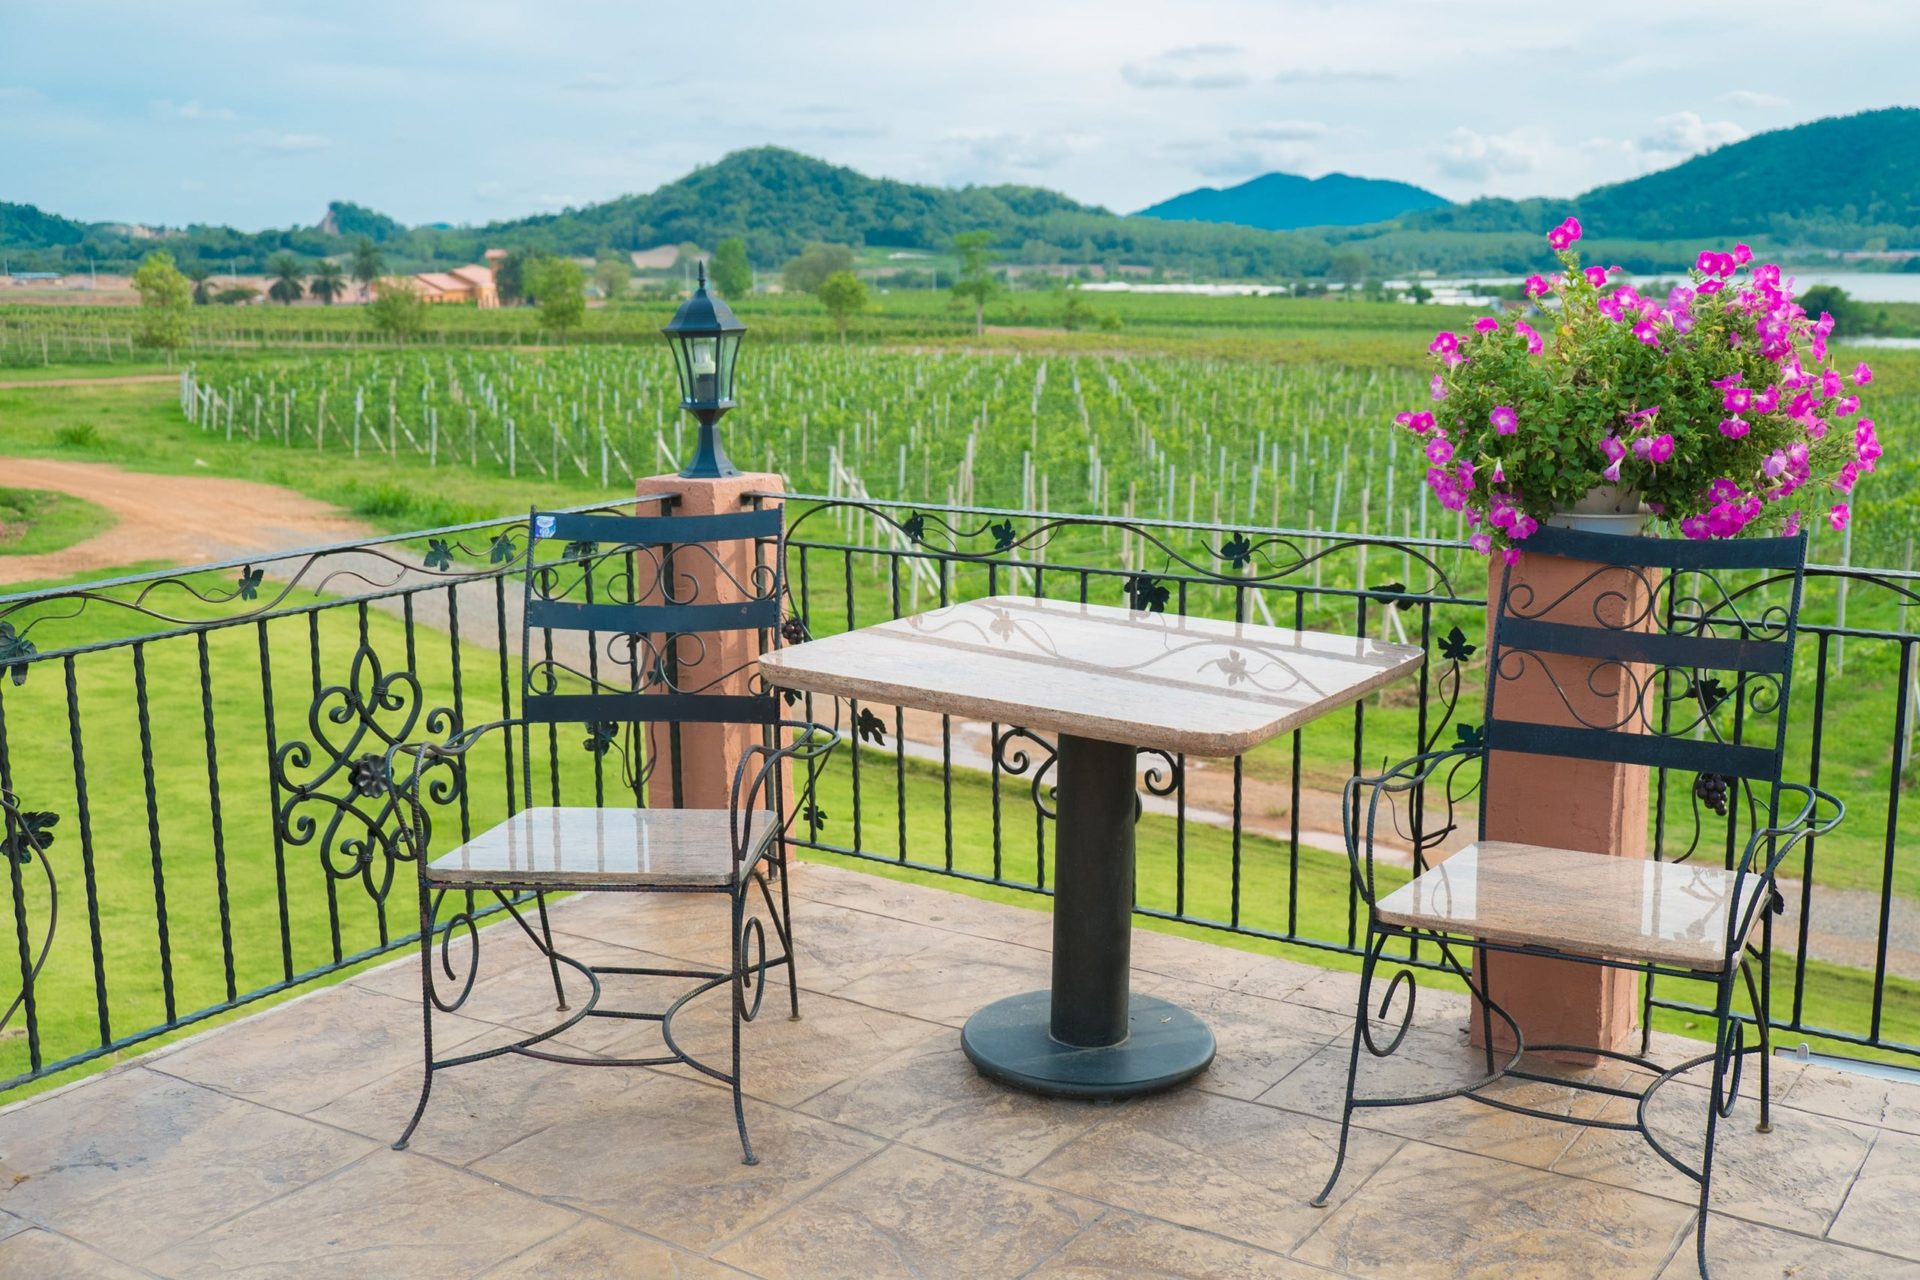 The corner of an outdoor patio overlooking a vineyard